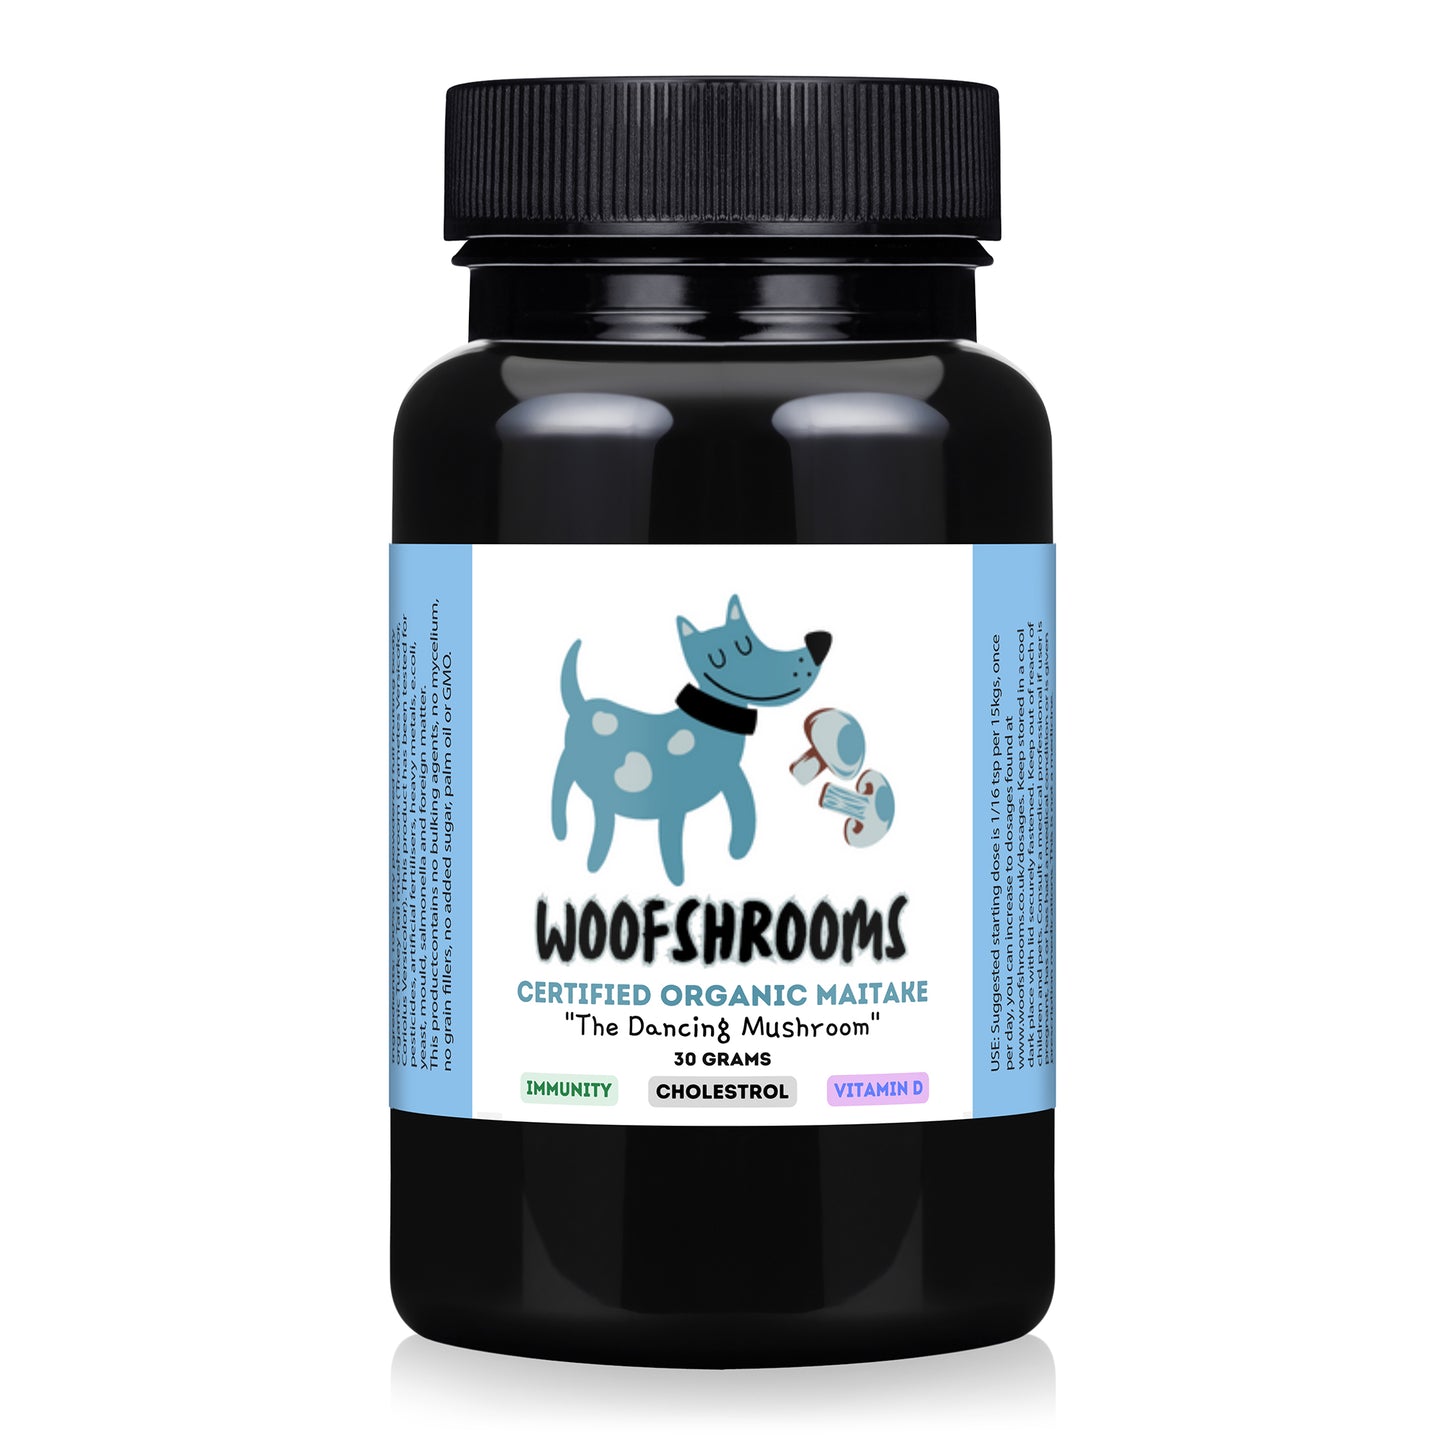 Organic Maitake mushroom powder with benefits for dogs.